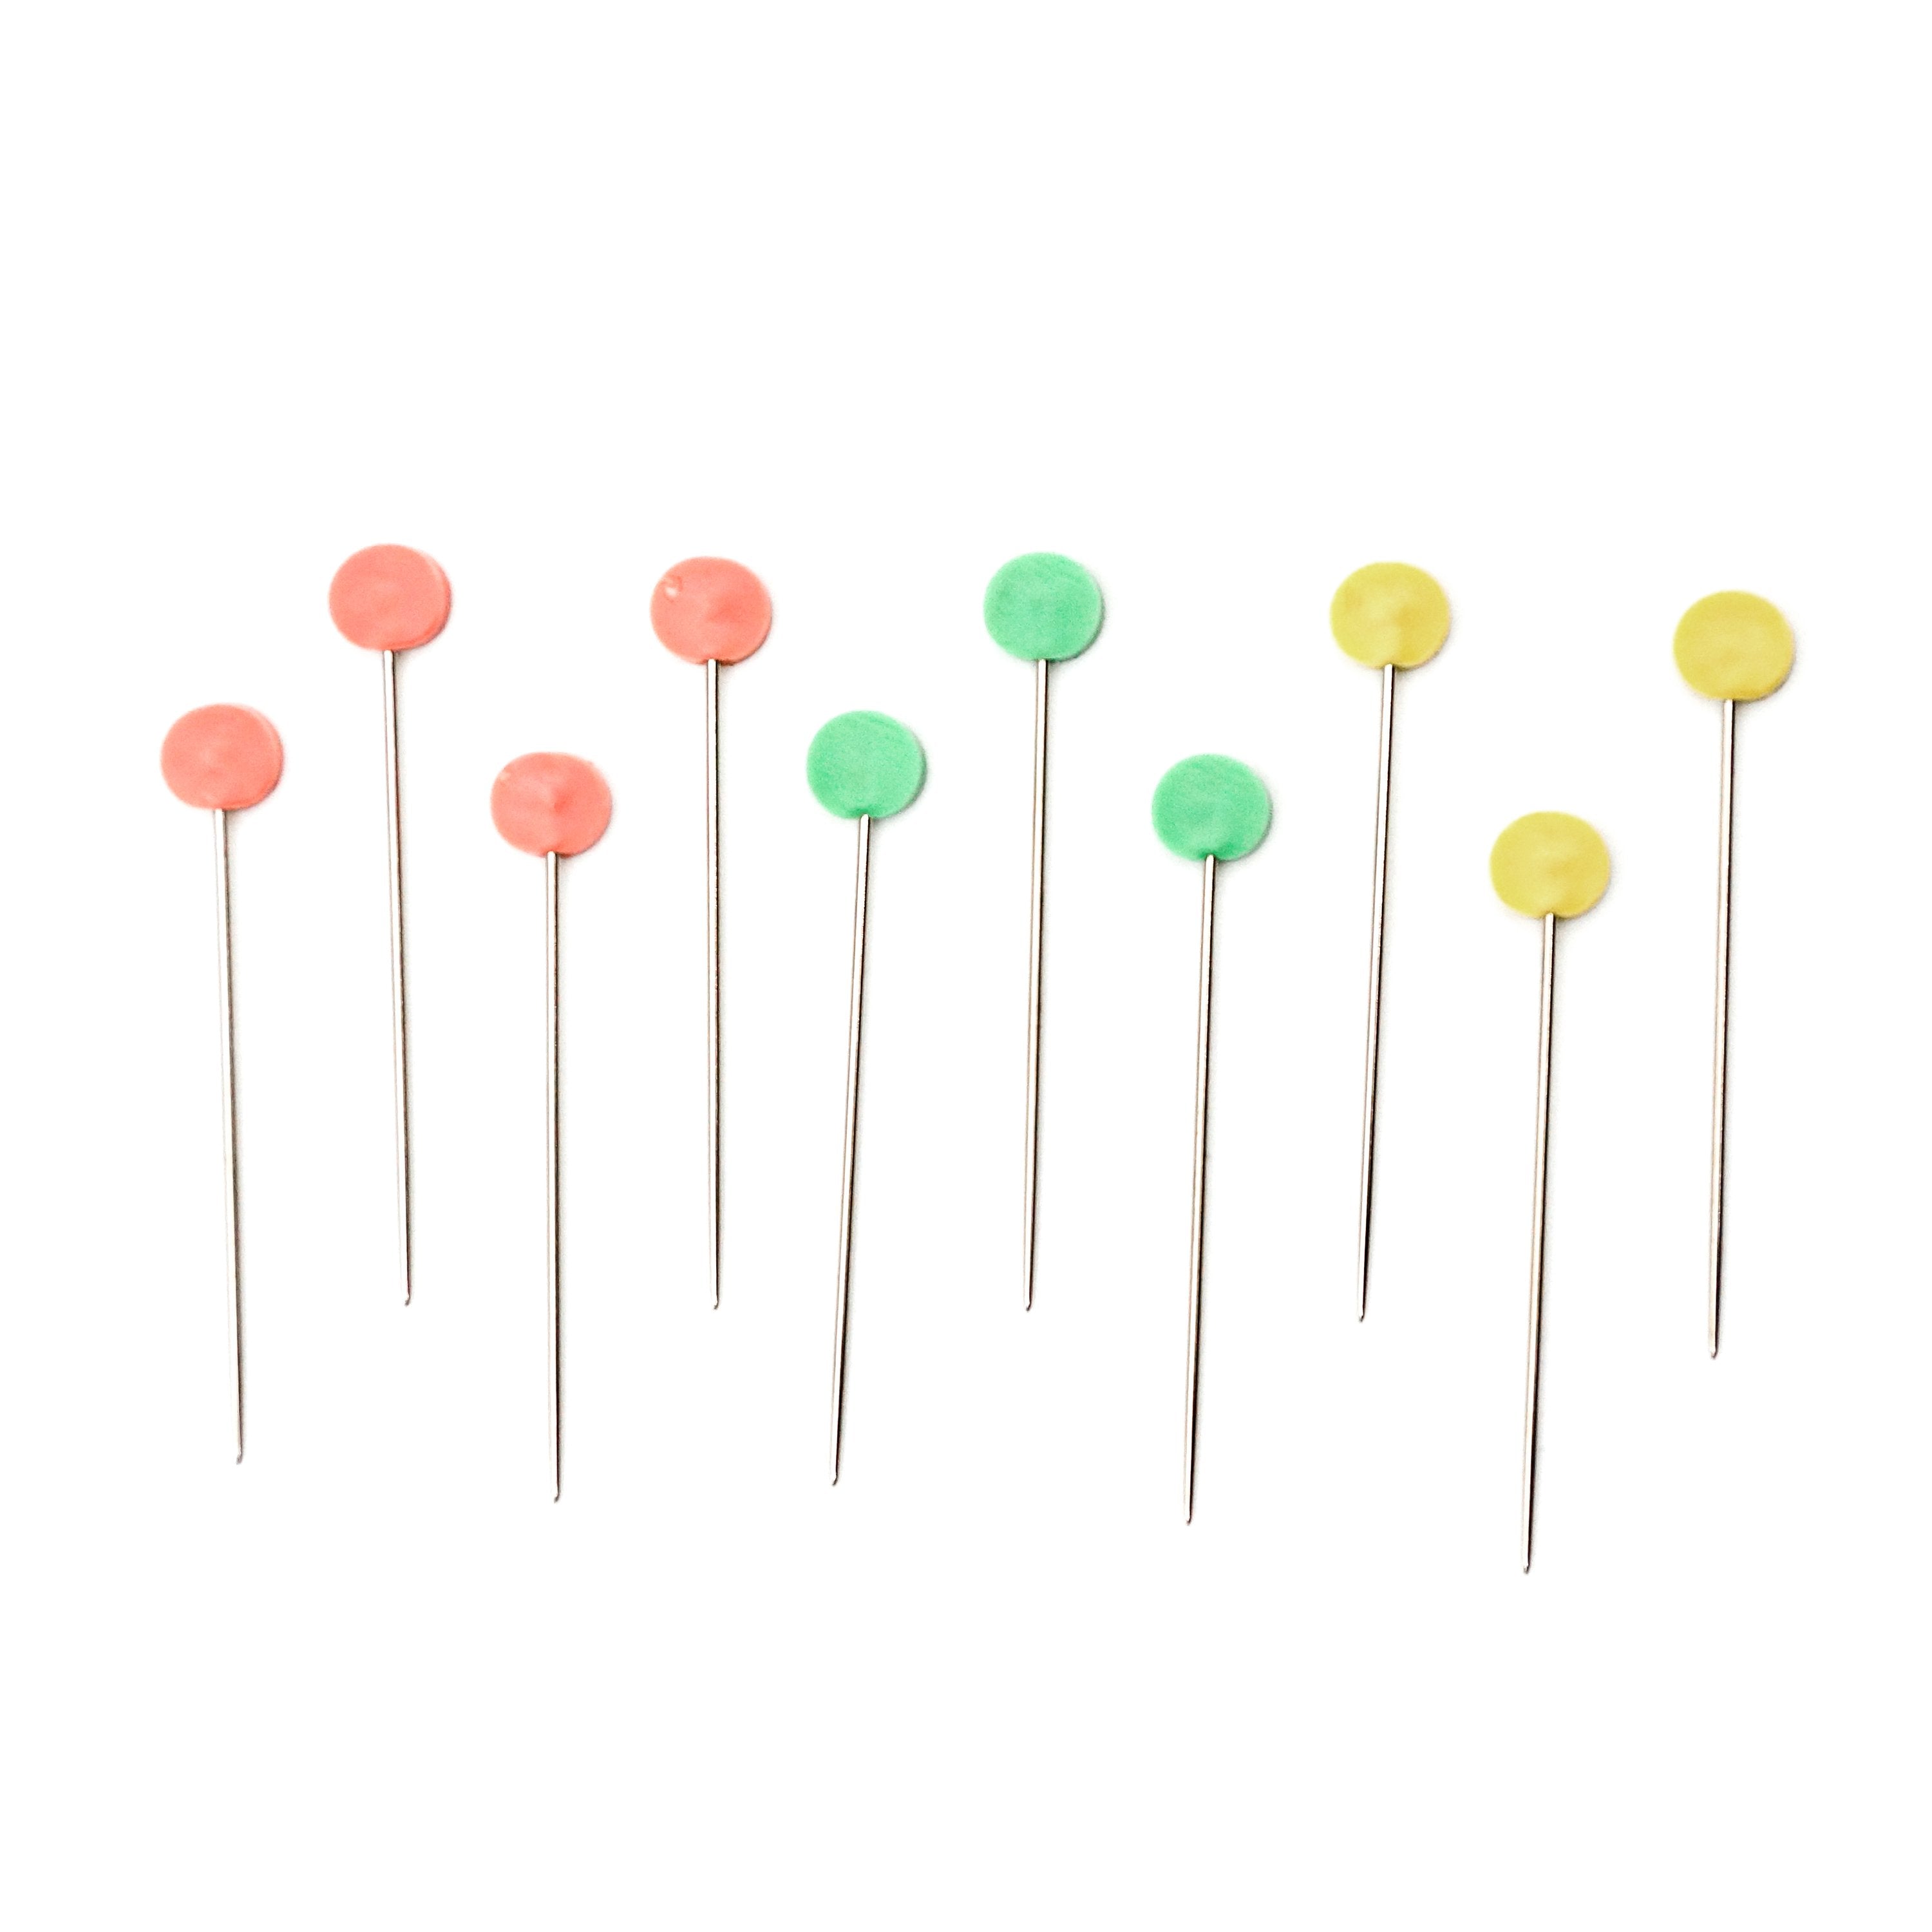 CLV - Marking Pins for Knitting - 10 pcs